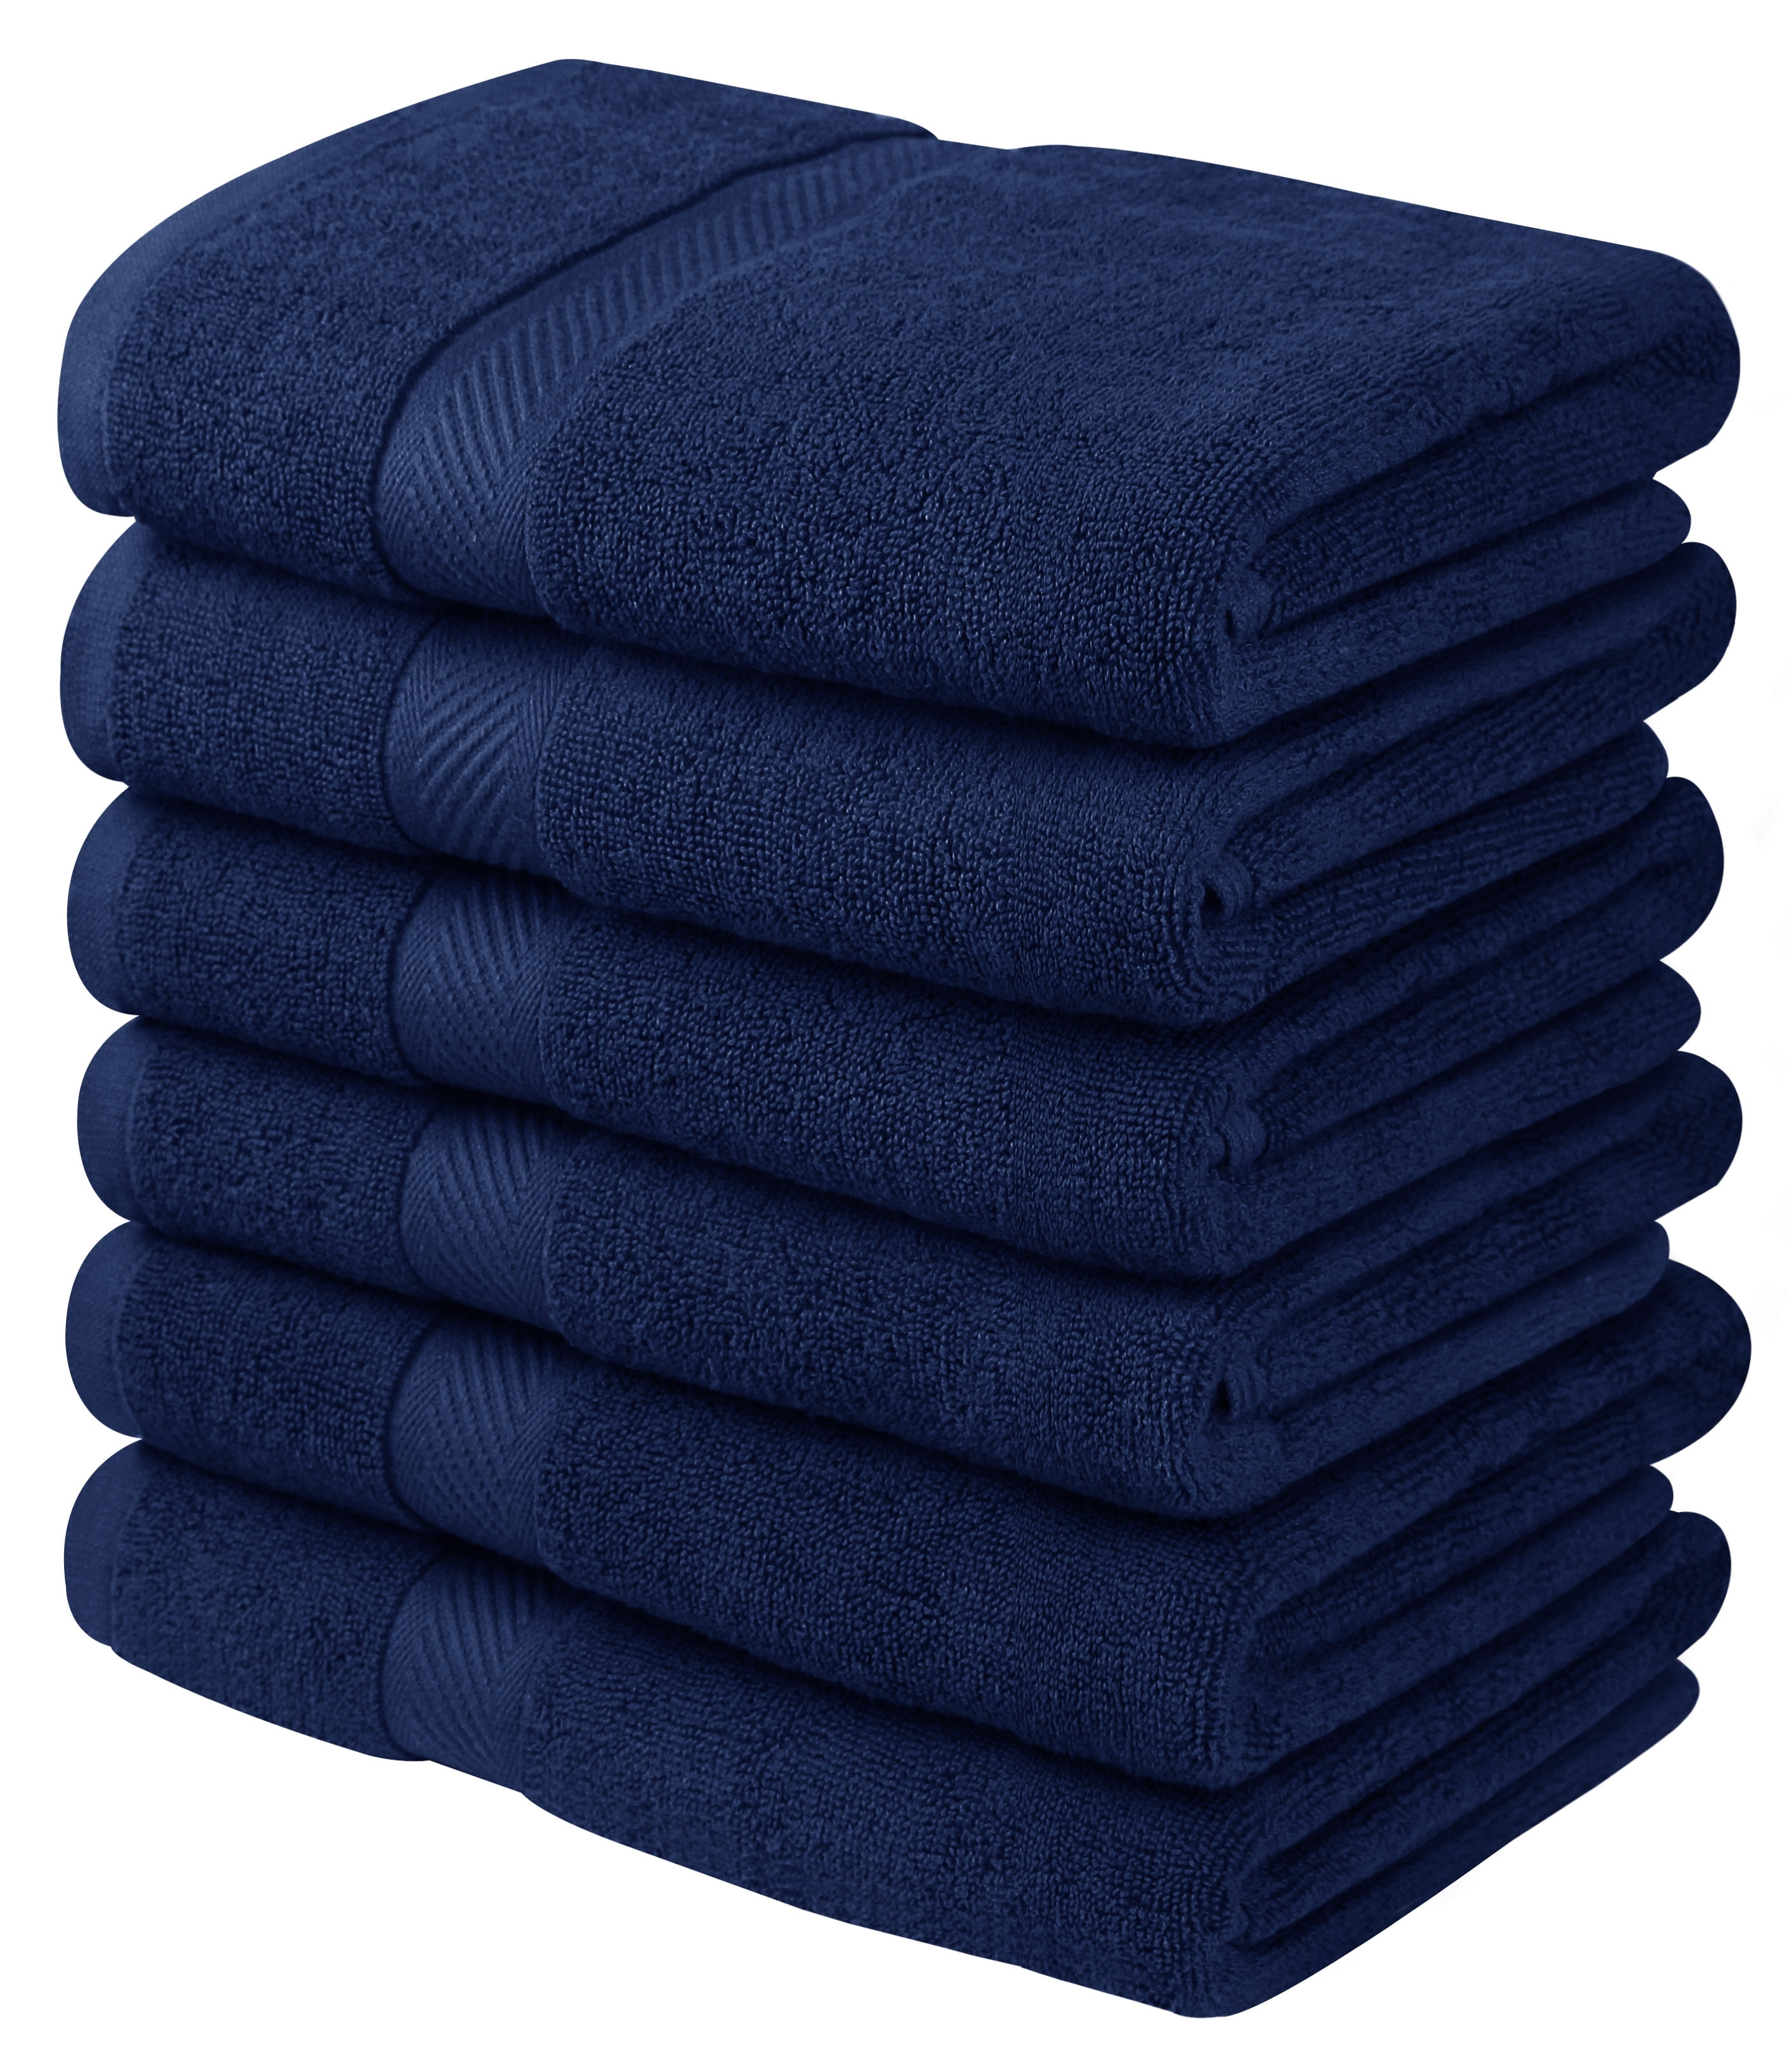 48 new white 16x27 premium hand towels spa salon hotel resort plush absorbent 